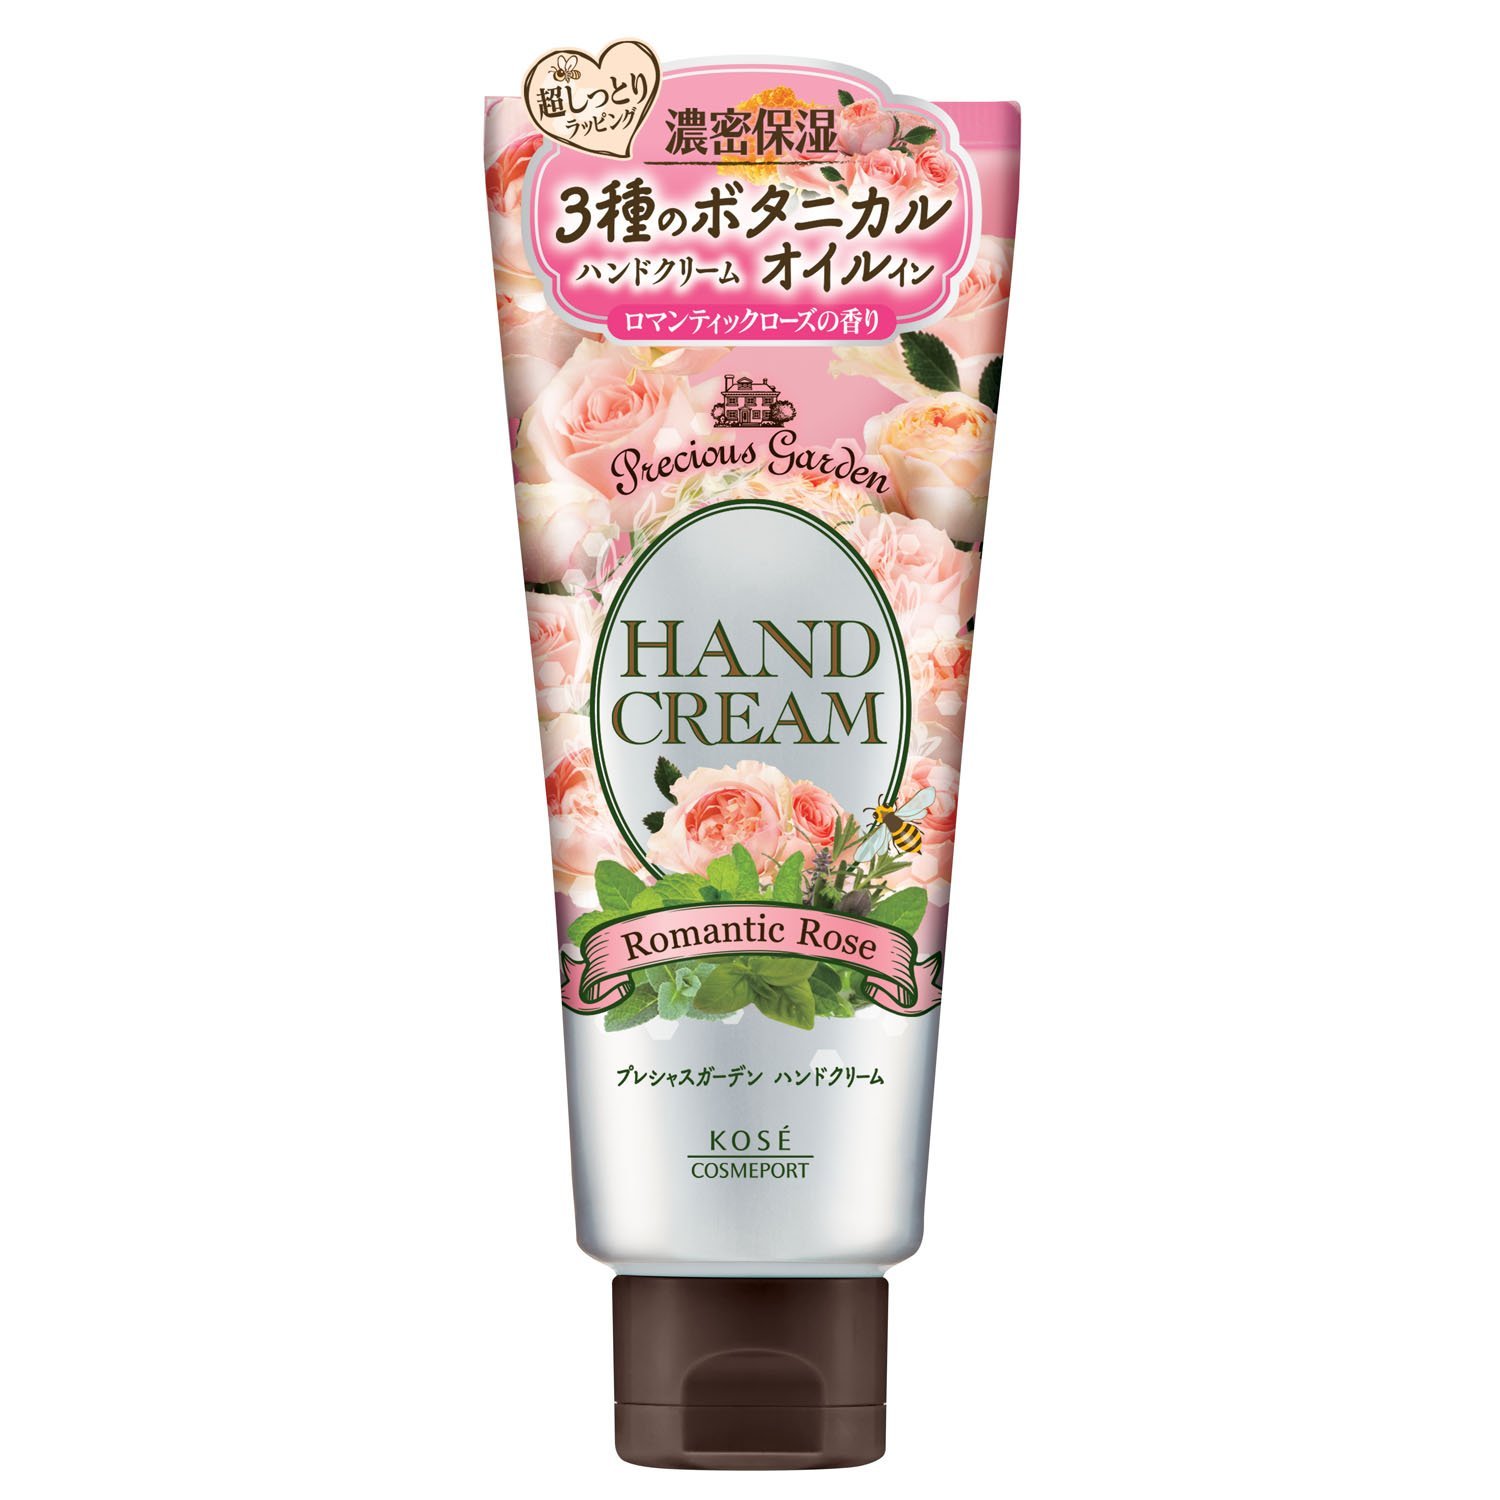 Kose Precious Garden Hand Cream 70g (Romantic Rose)